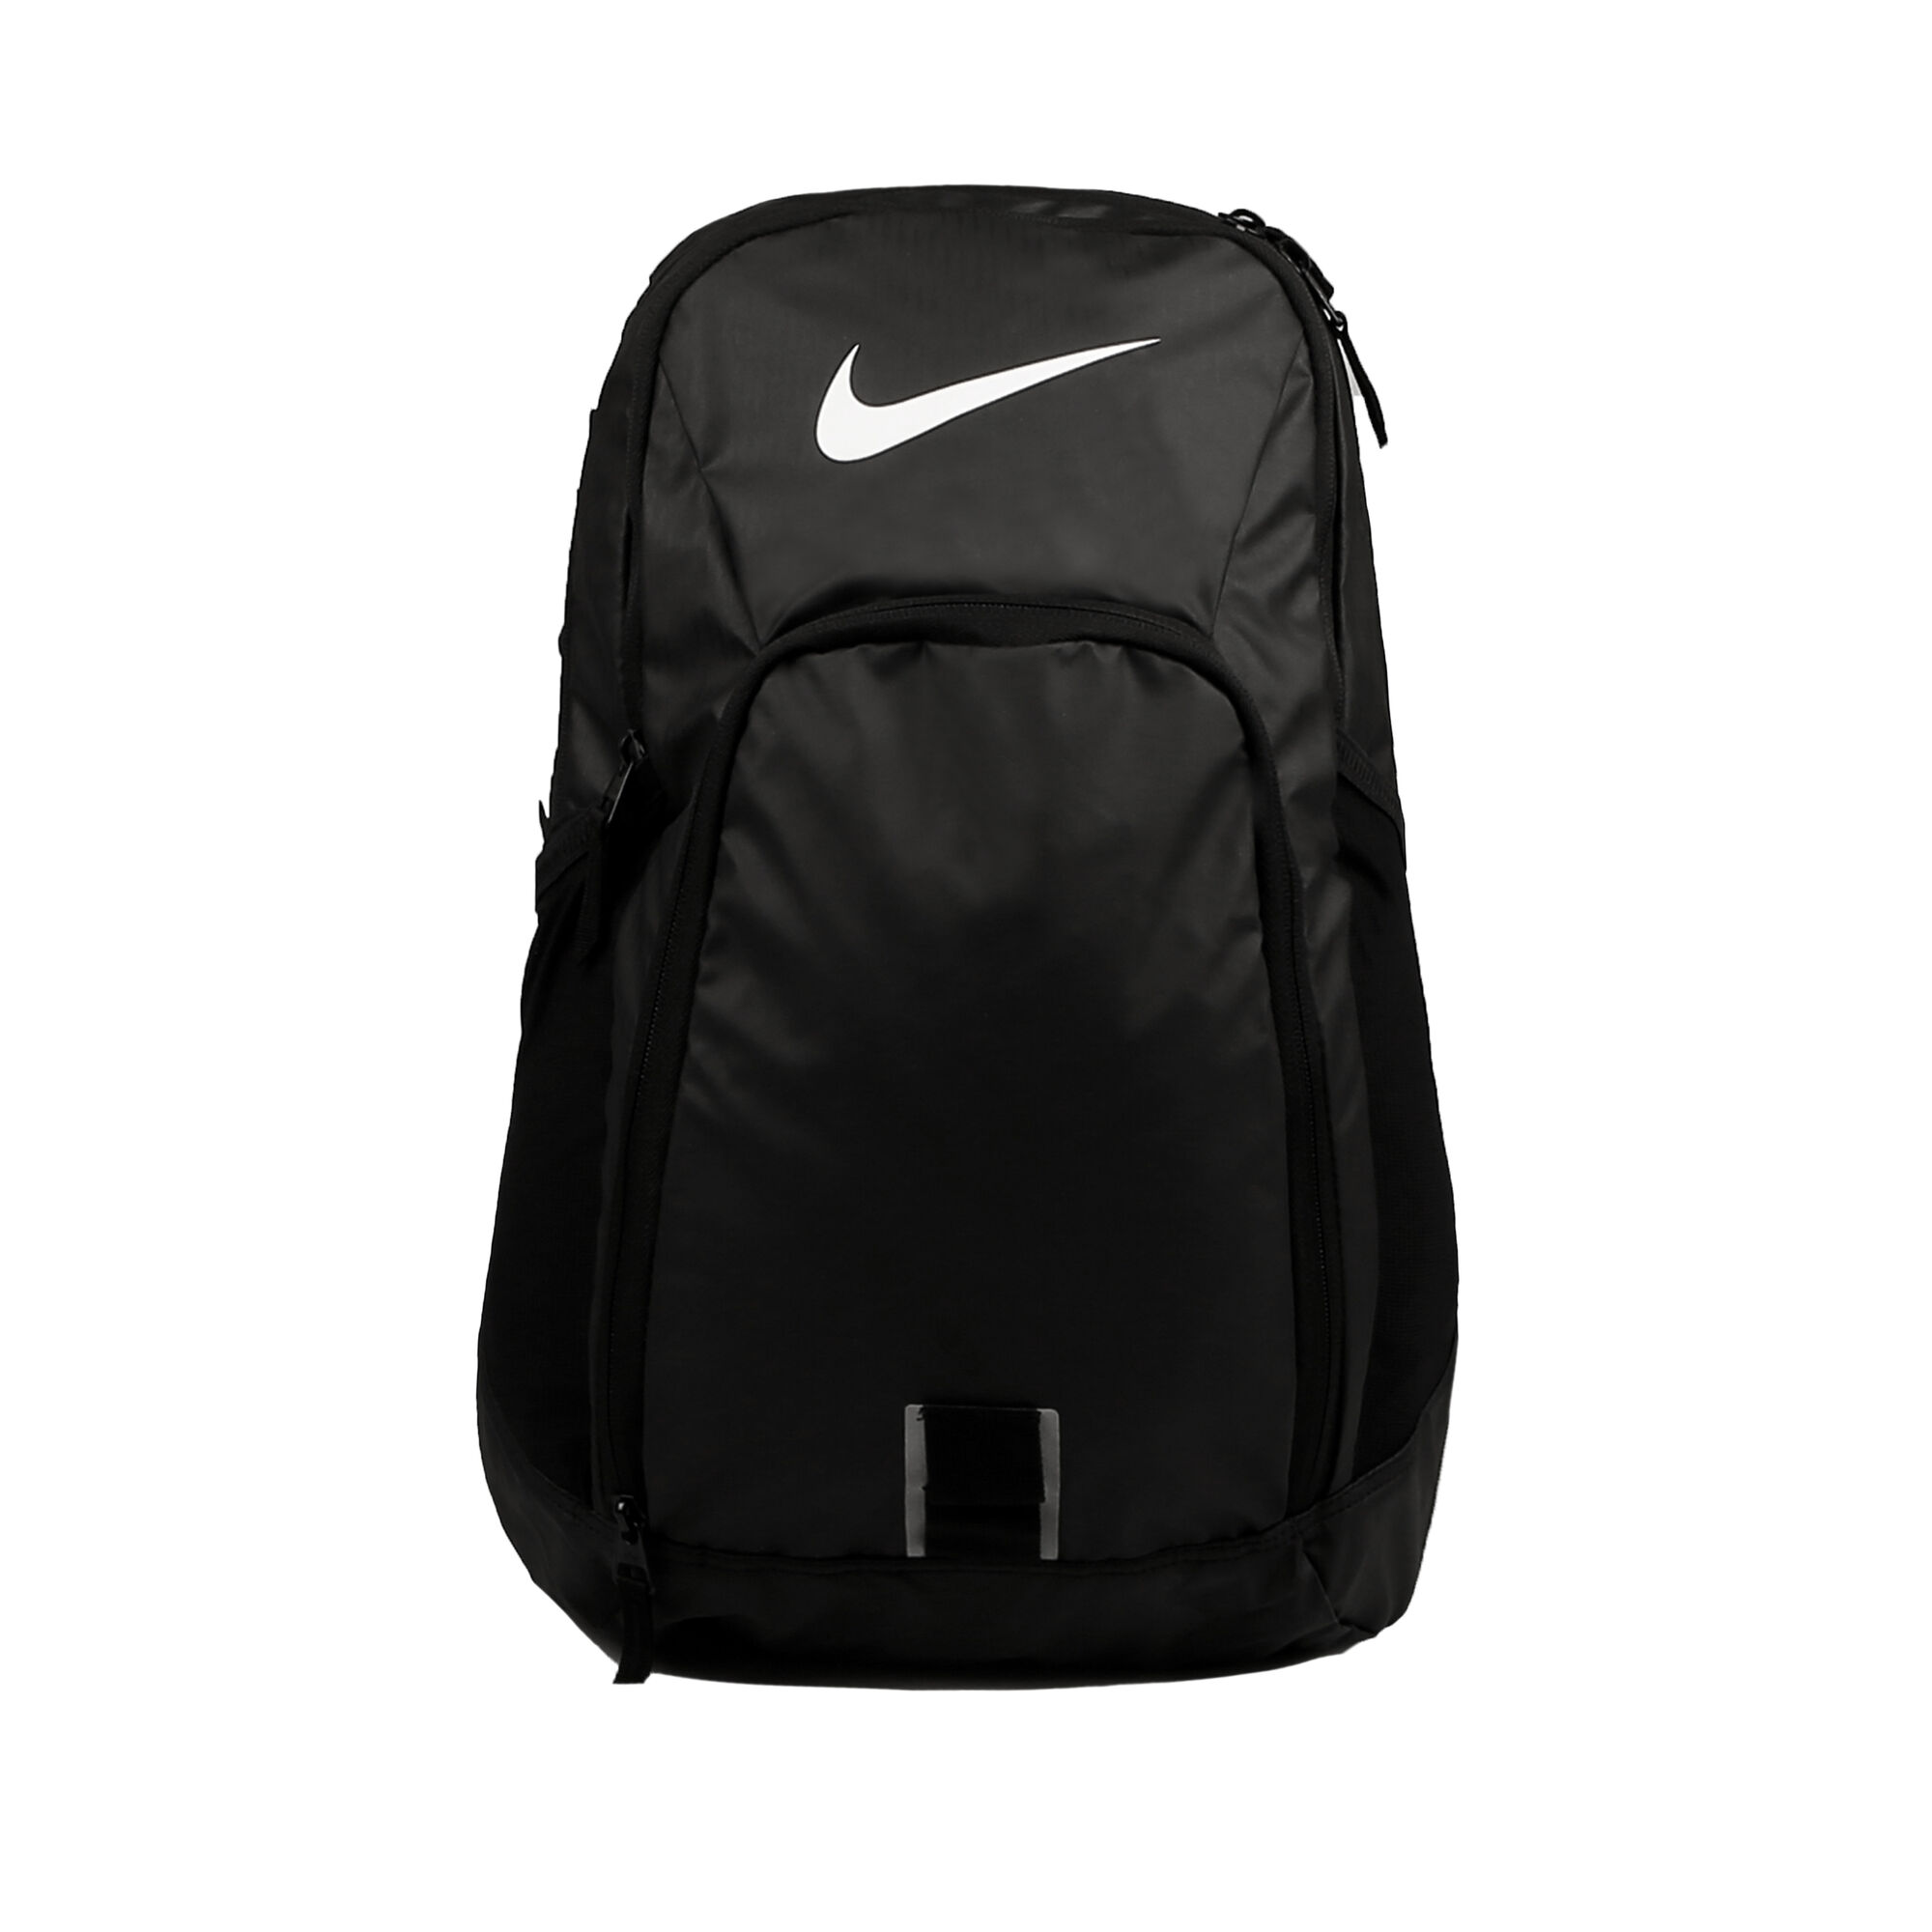 James Dyson atravesar sostén Nike Alpha Adapt Rev Mochila - Negro, Negro compra online | Tennis-Point